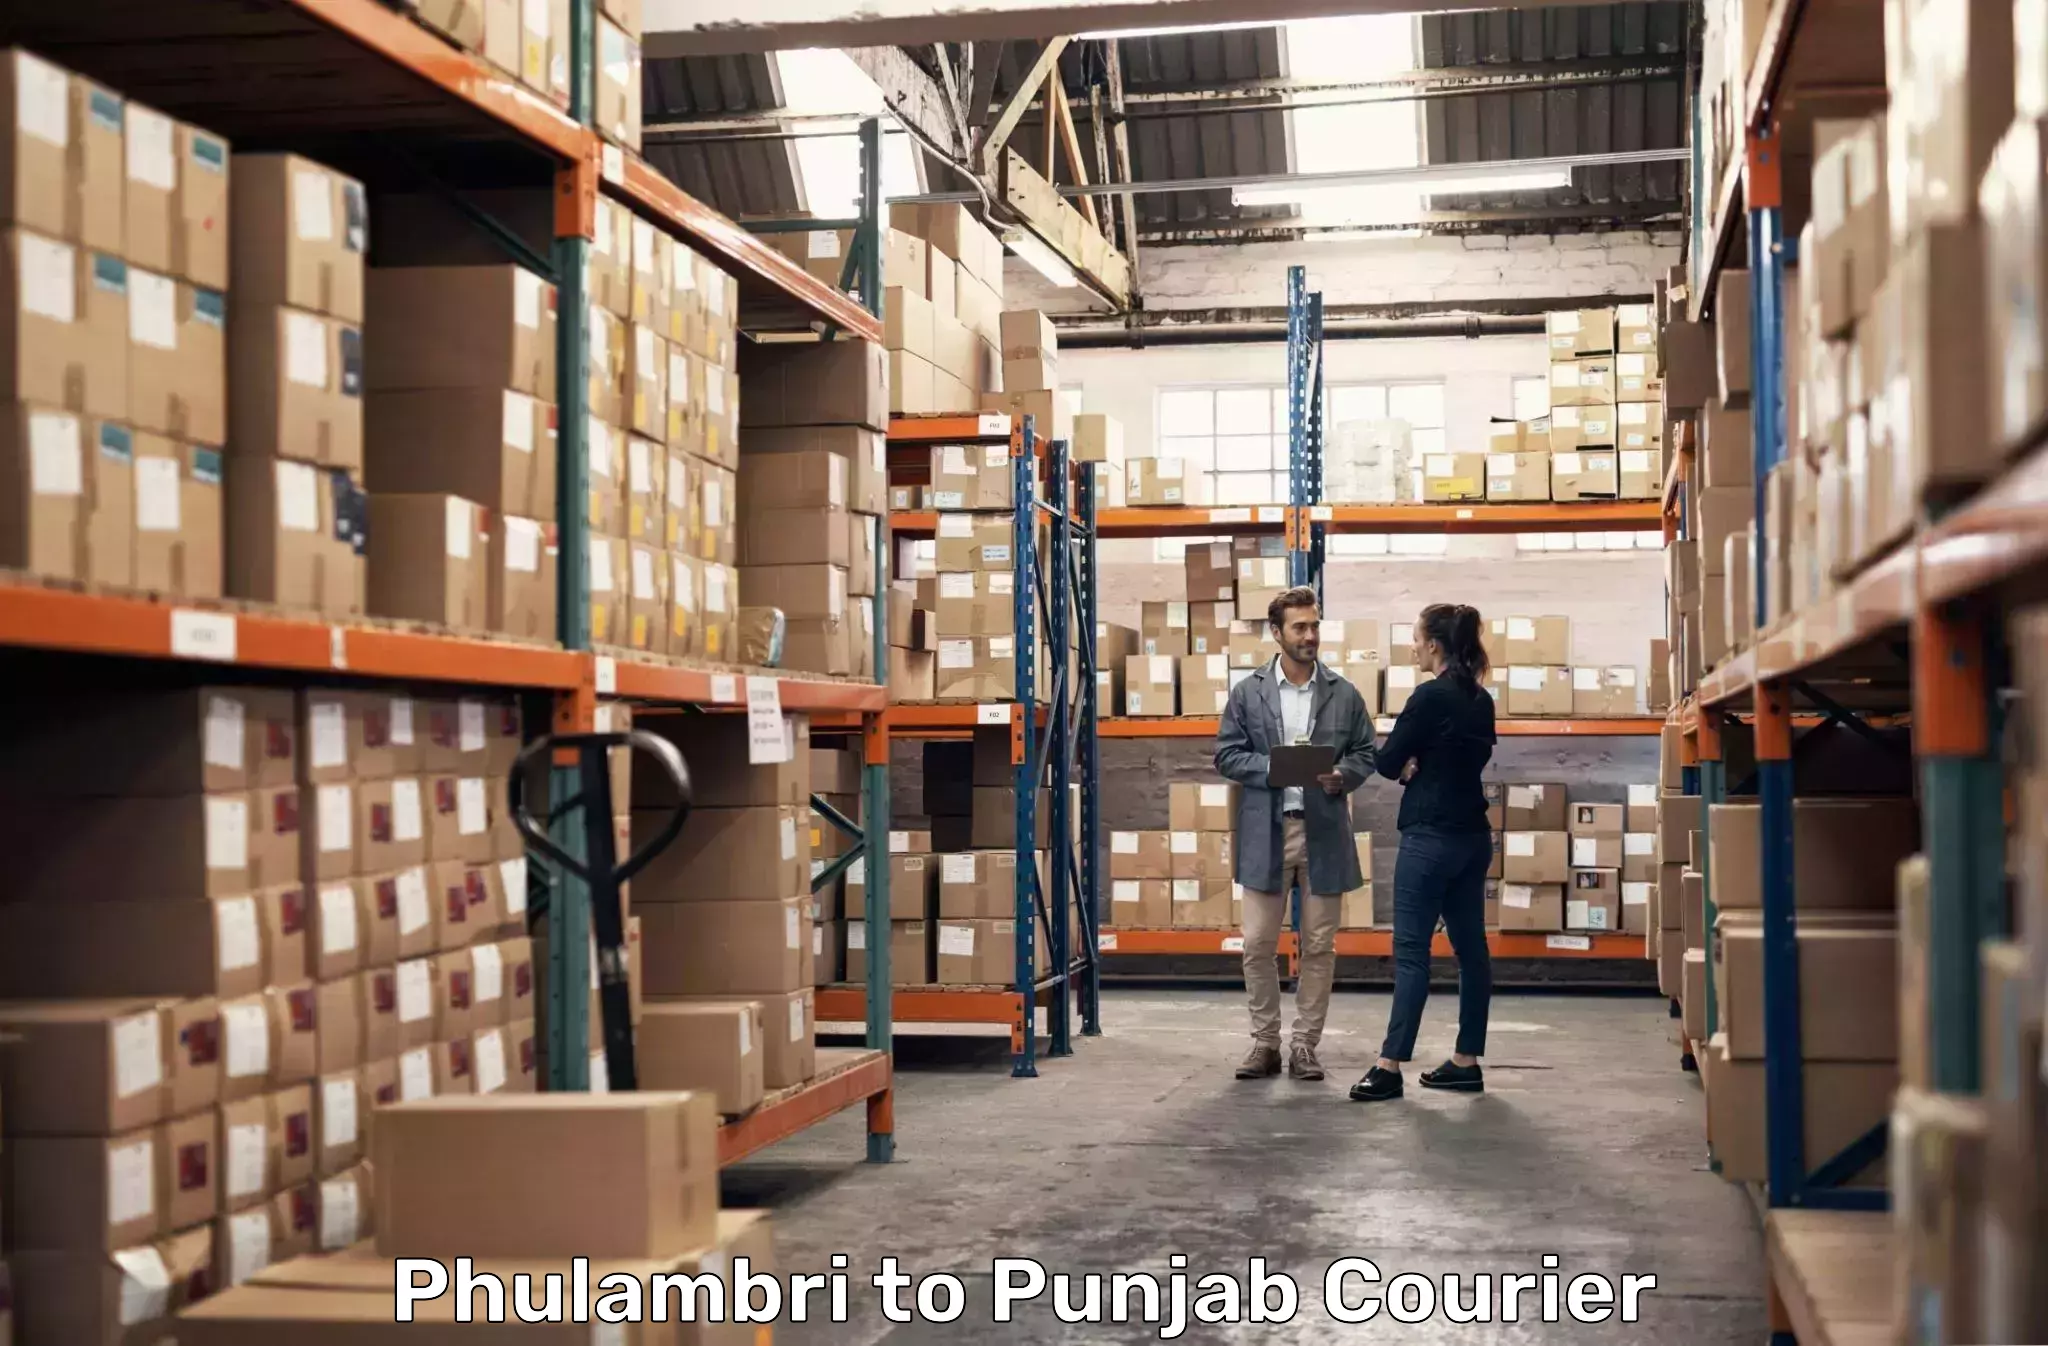 Express courier capabilities in Phulambri to Faridkot